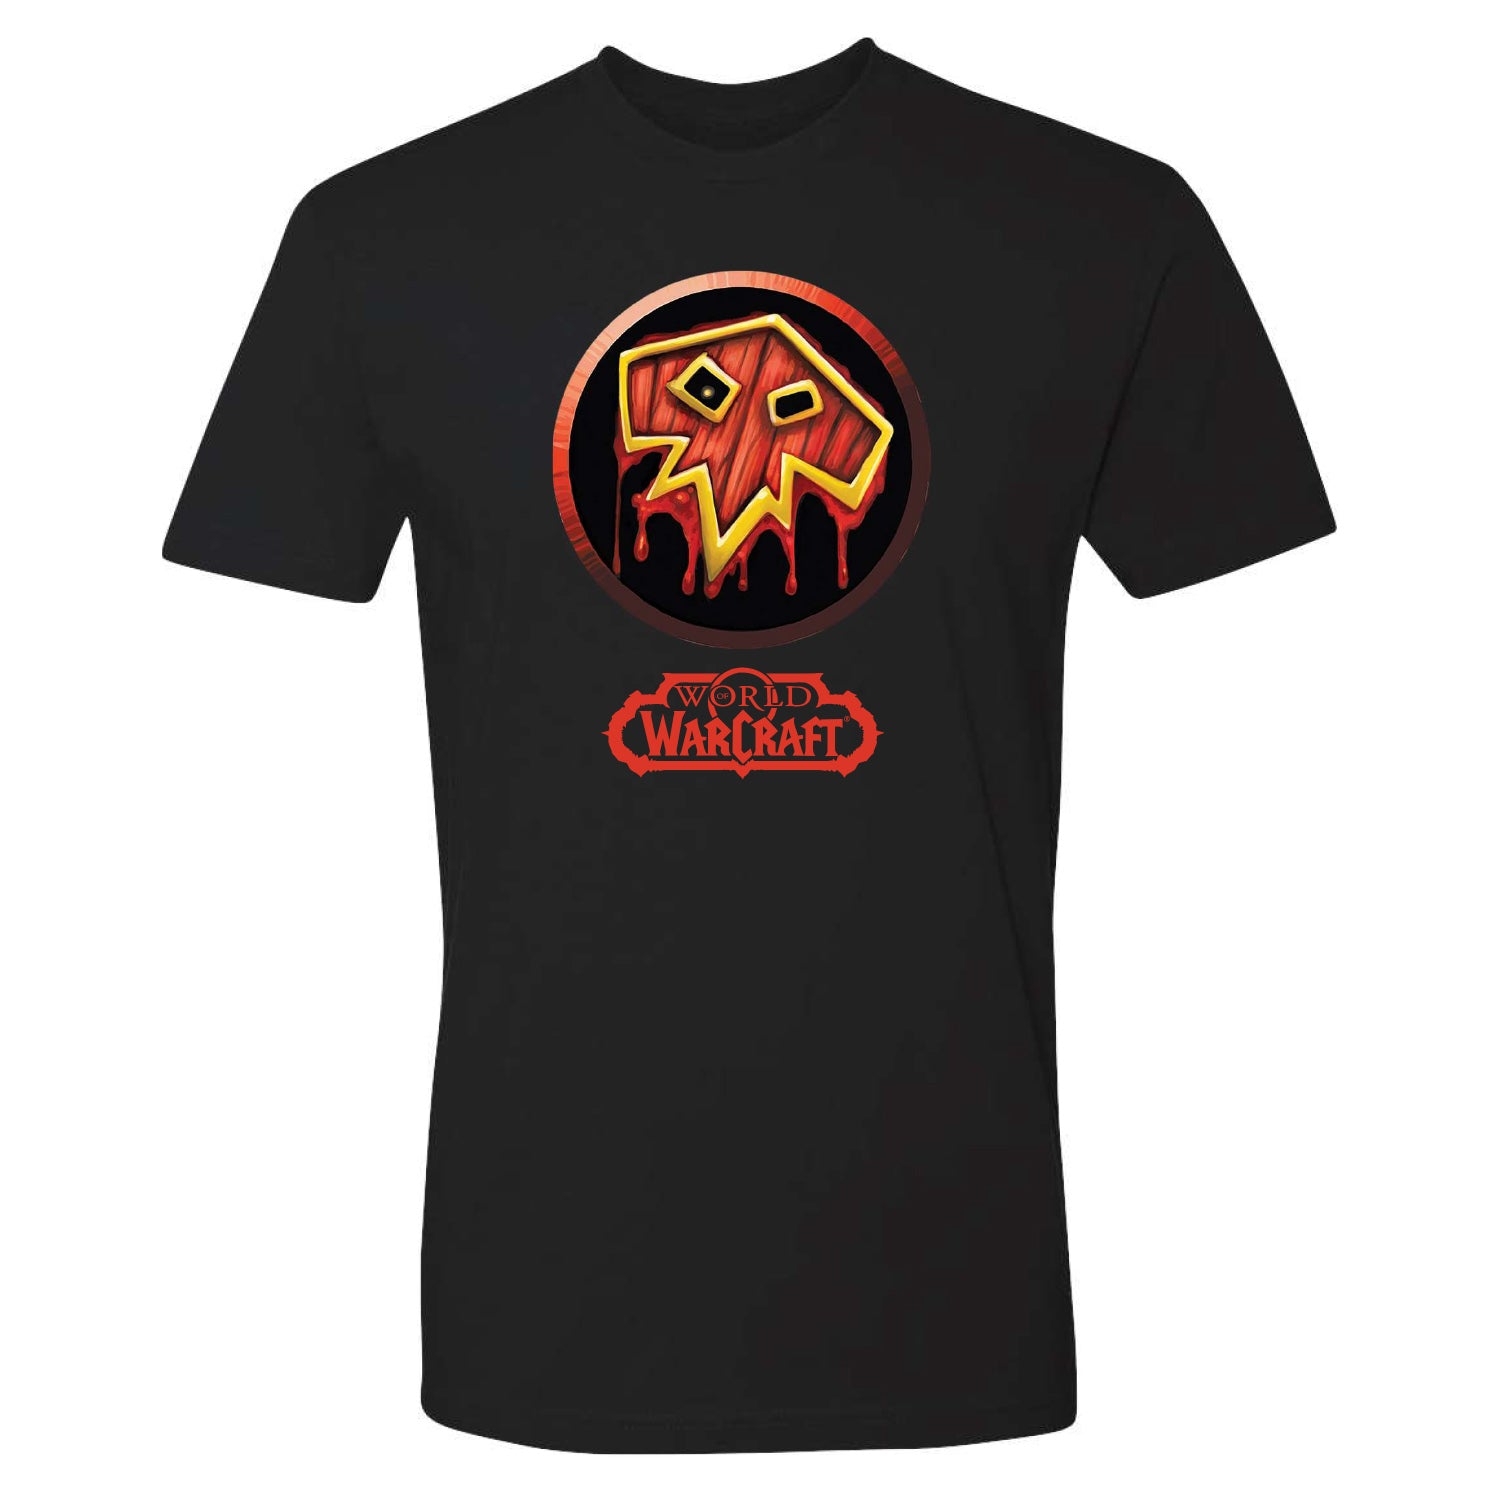 World of Warcraft Shaman T-Shirt - Front View Black Version